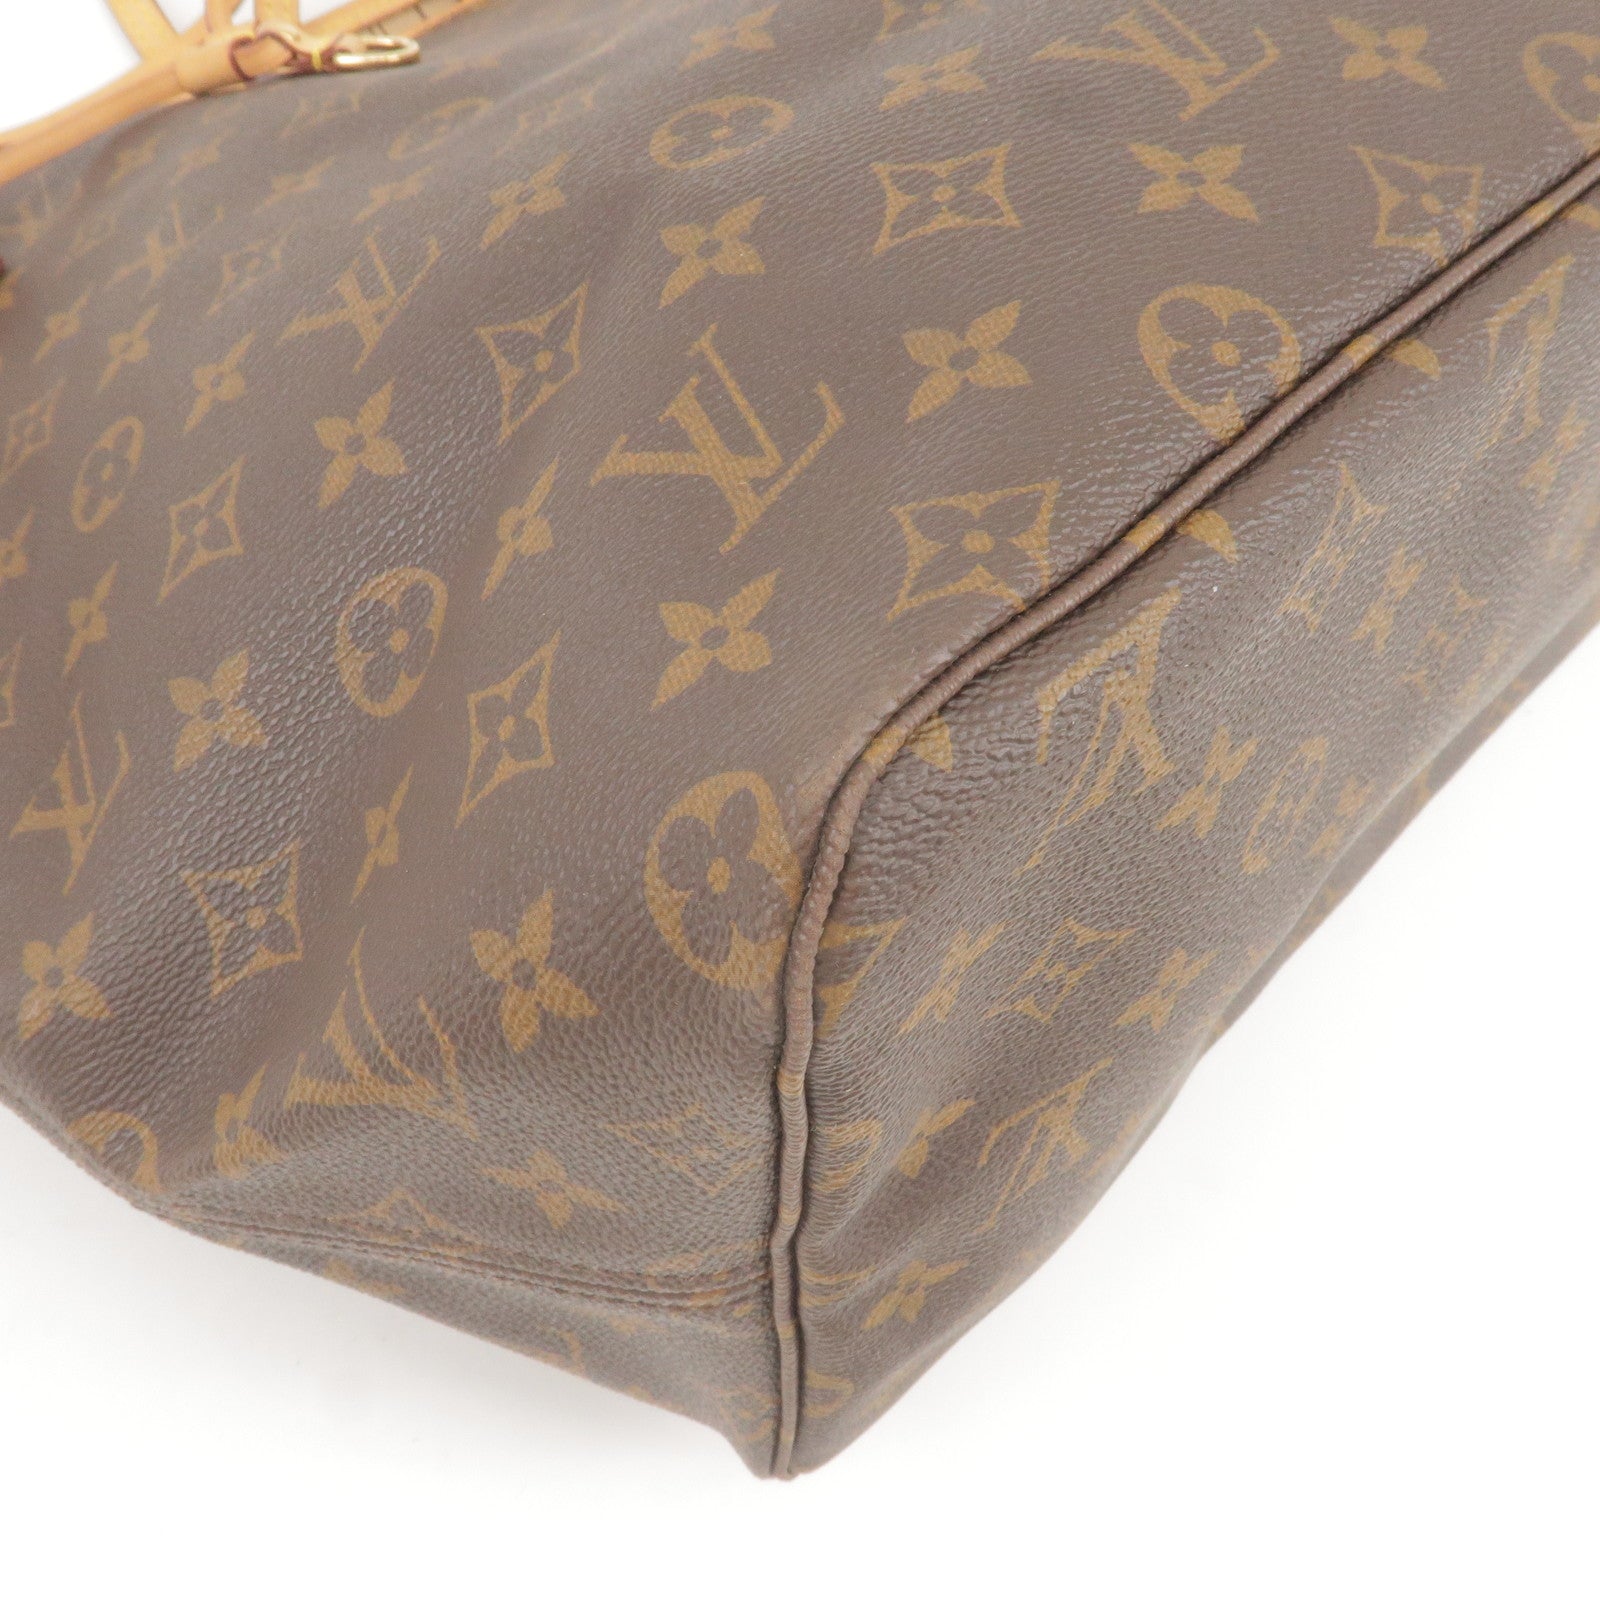 Louis Vuitton Monogram Raspail GM - Brown Totes, Handbags